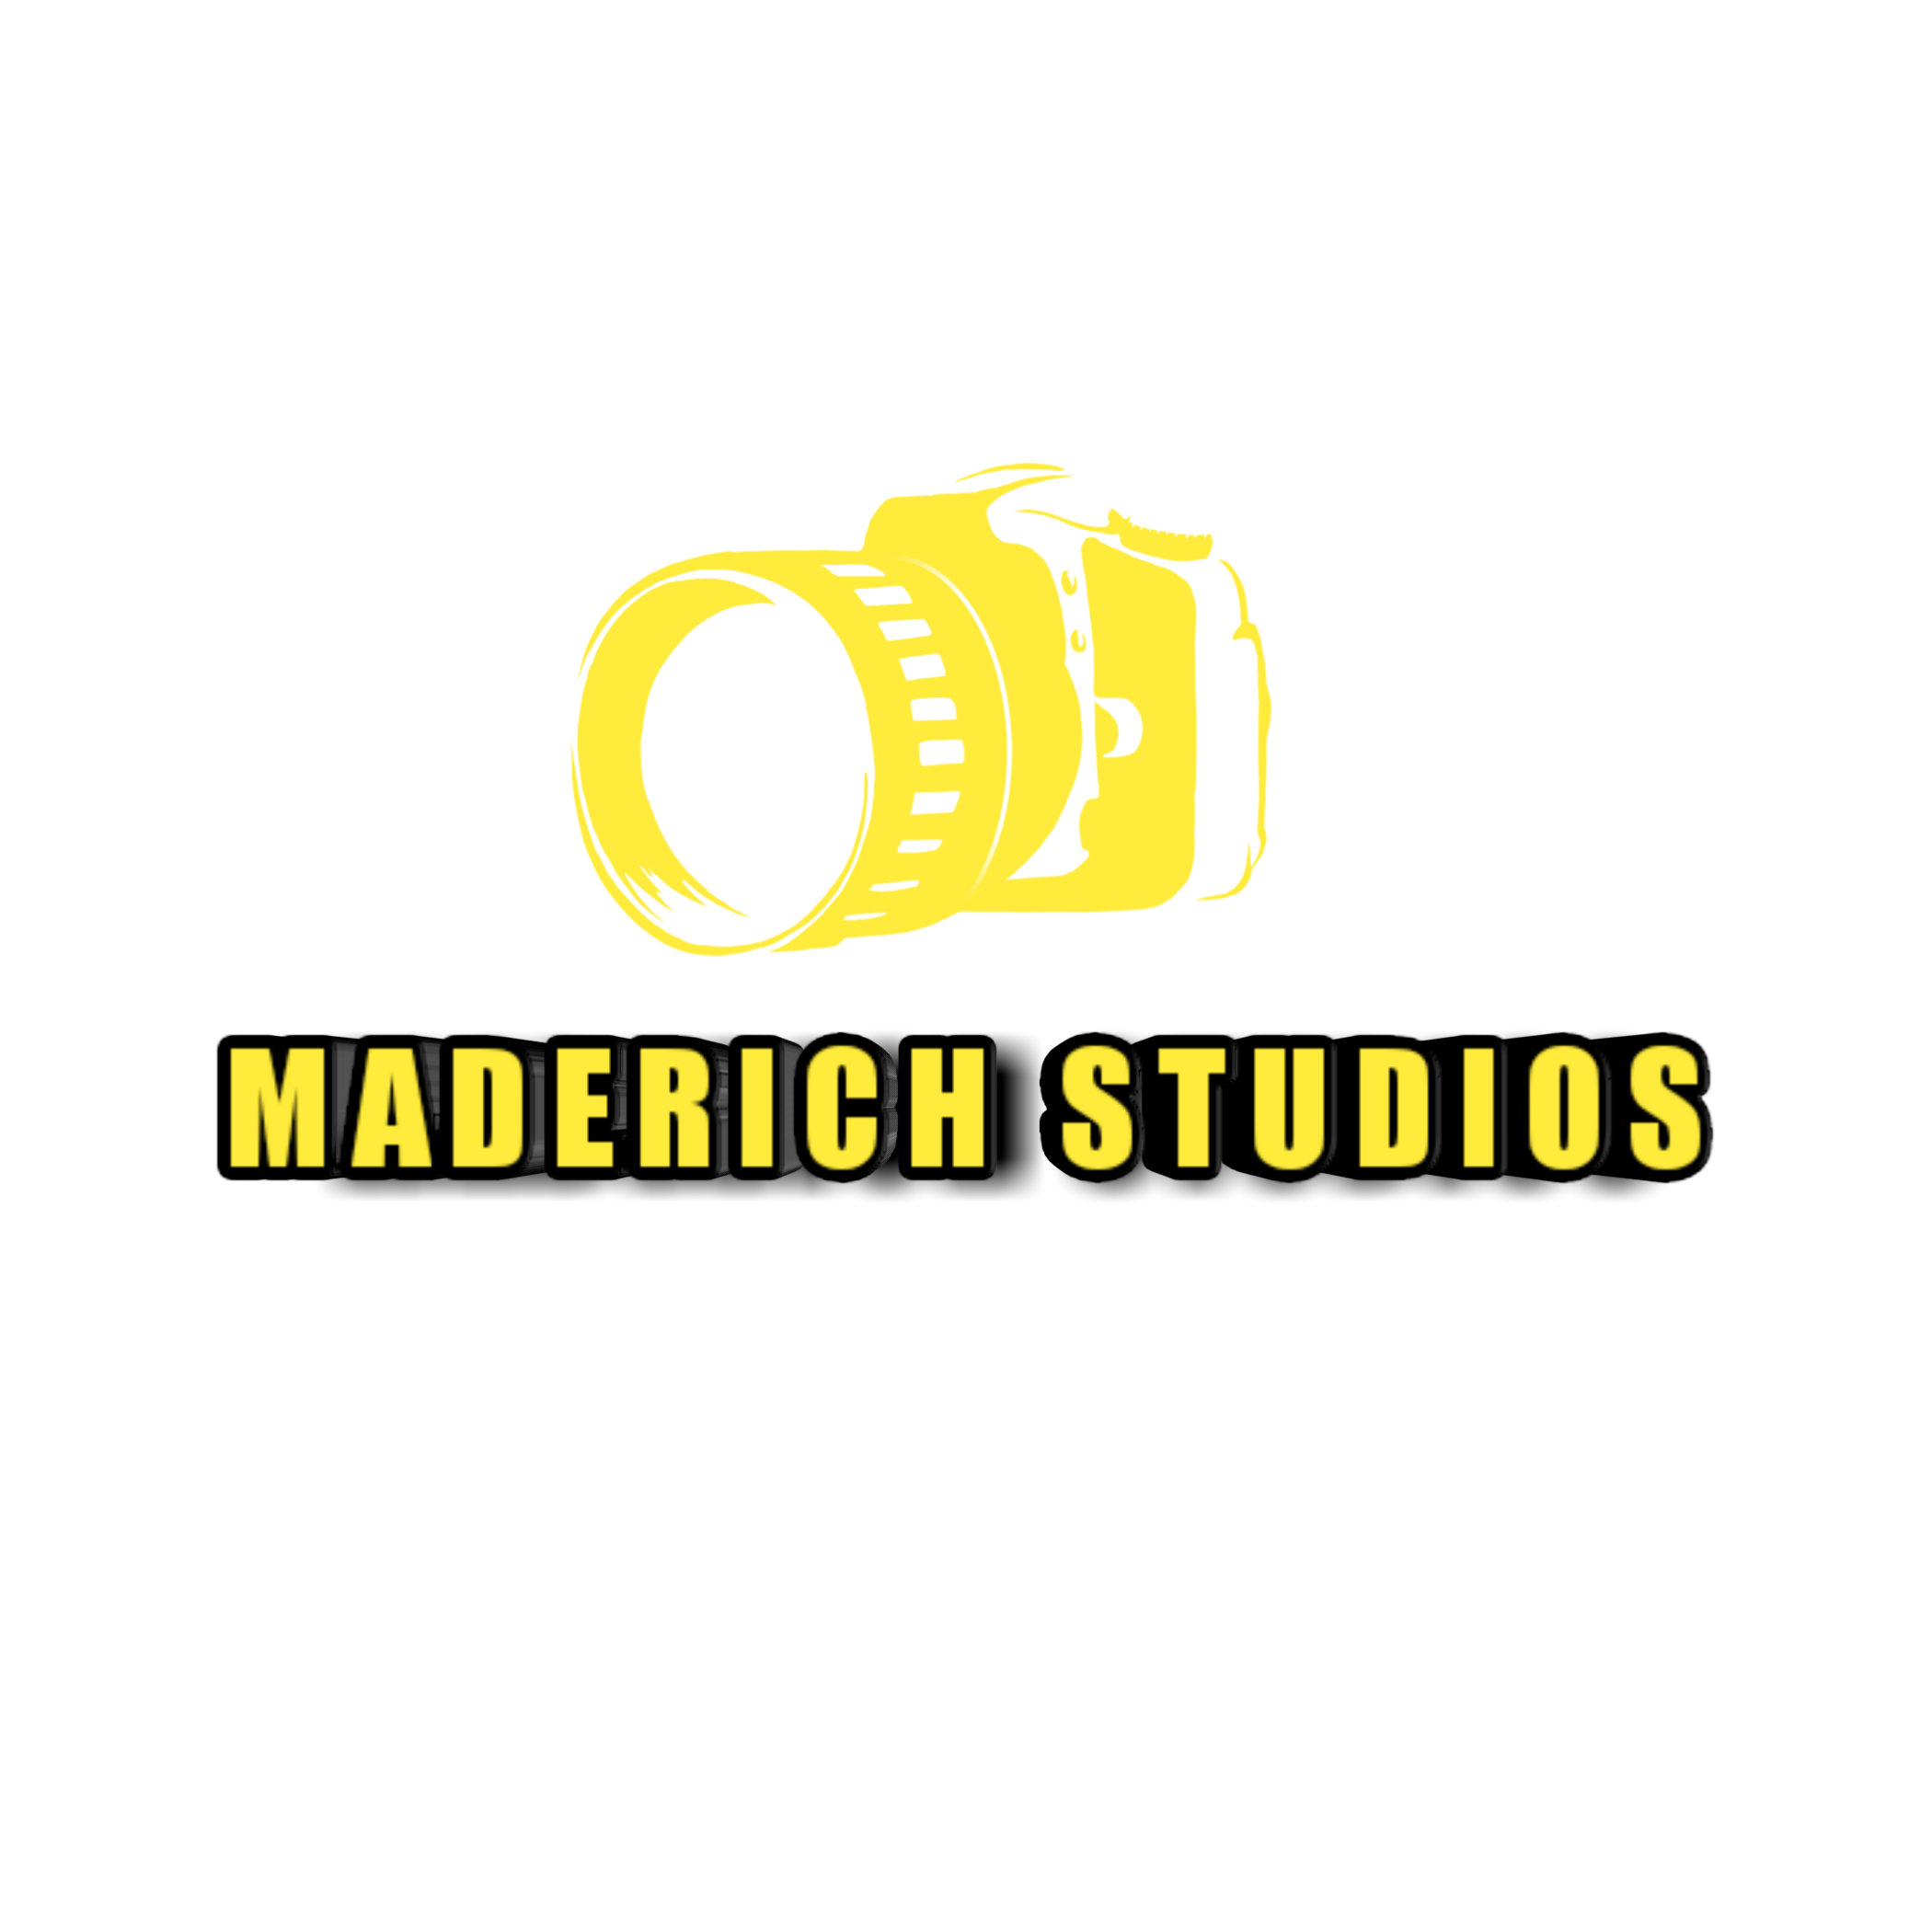 Maderich Studios